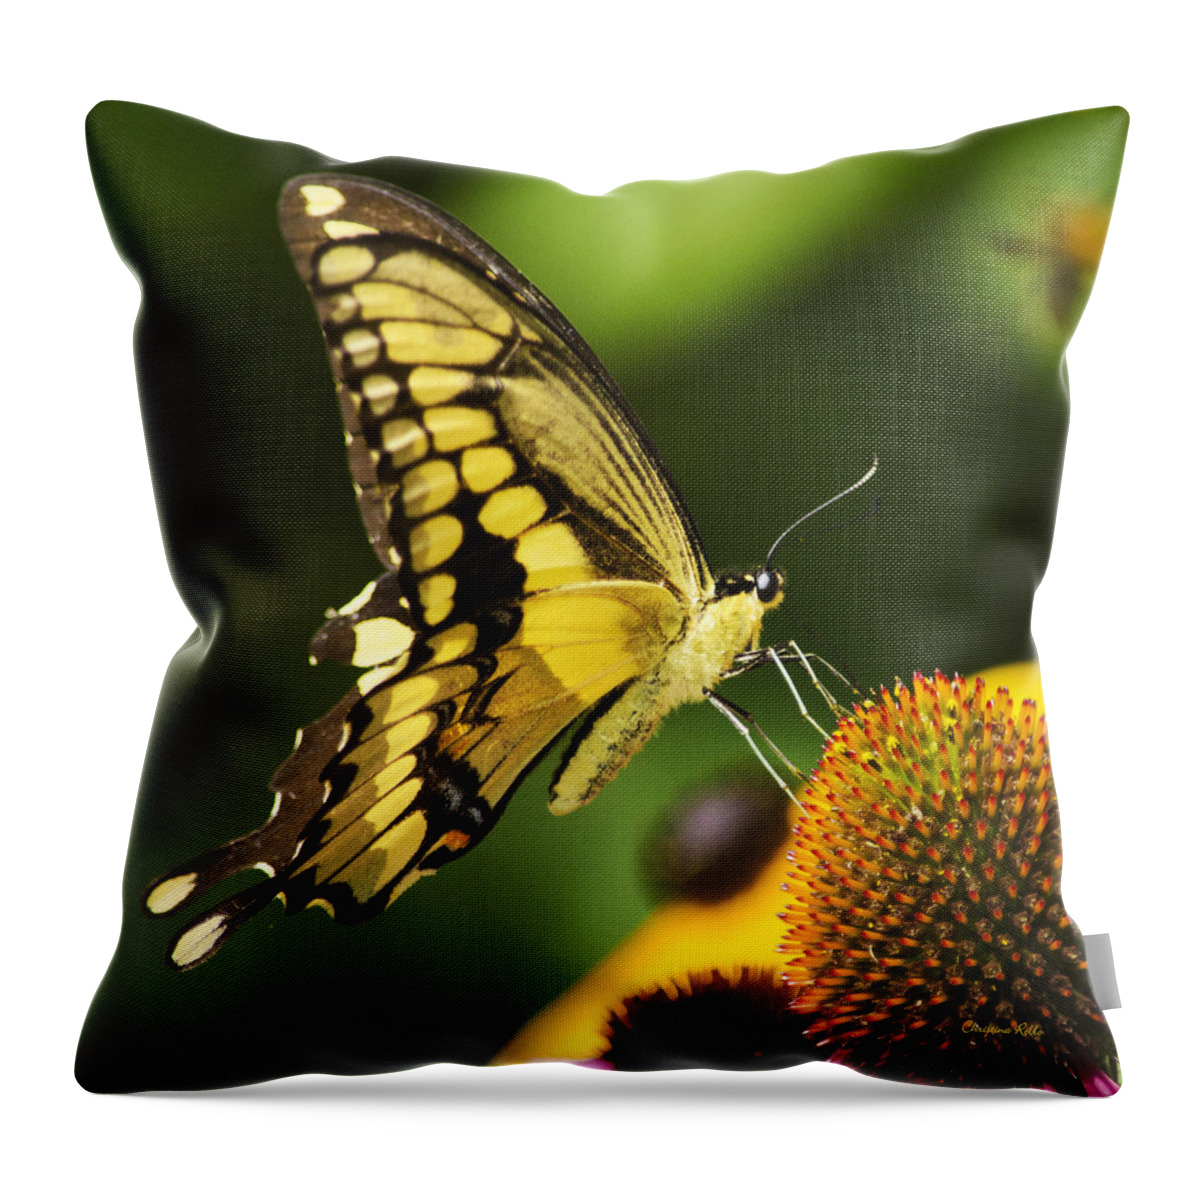 Giant Swallowtail Butterfly Throw Pillow featuring the photograph Swallowtail Butterfly Square by Christina Rollo